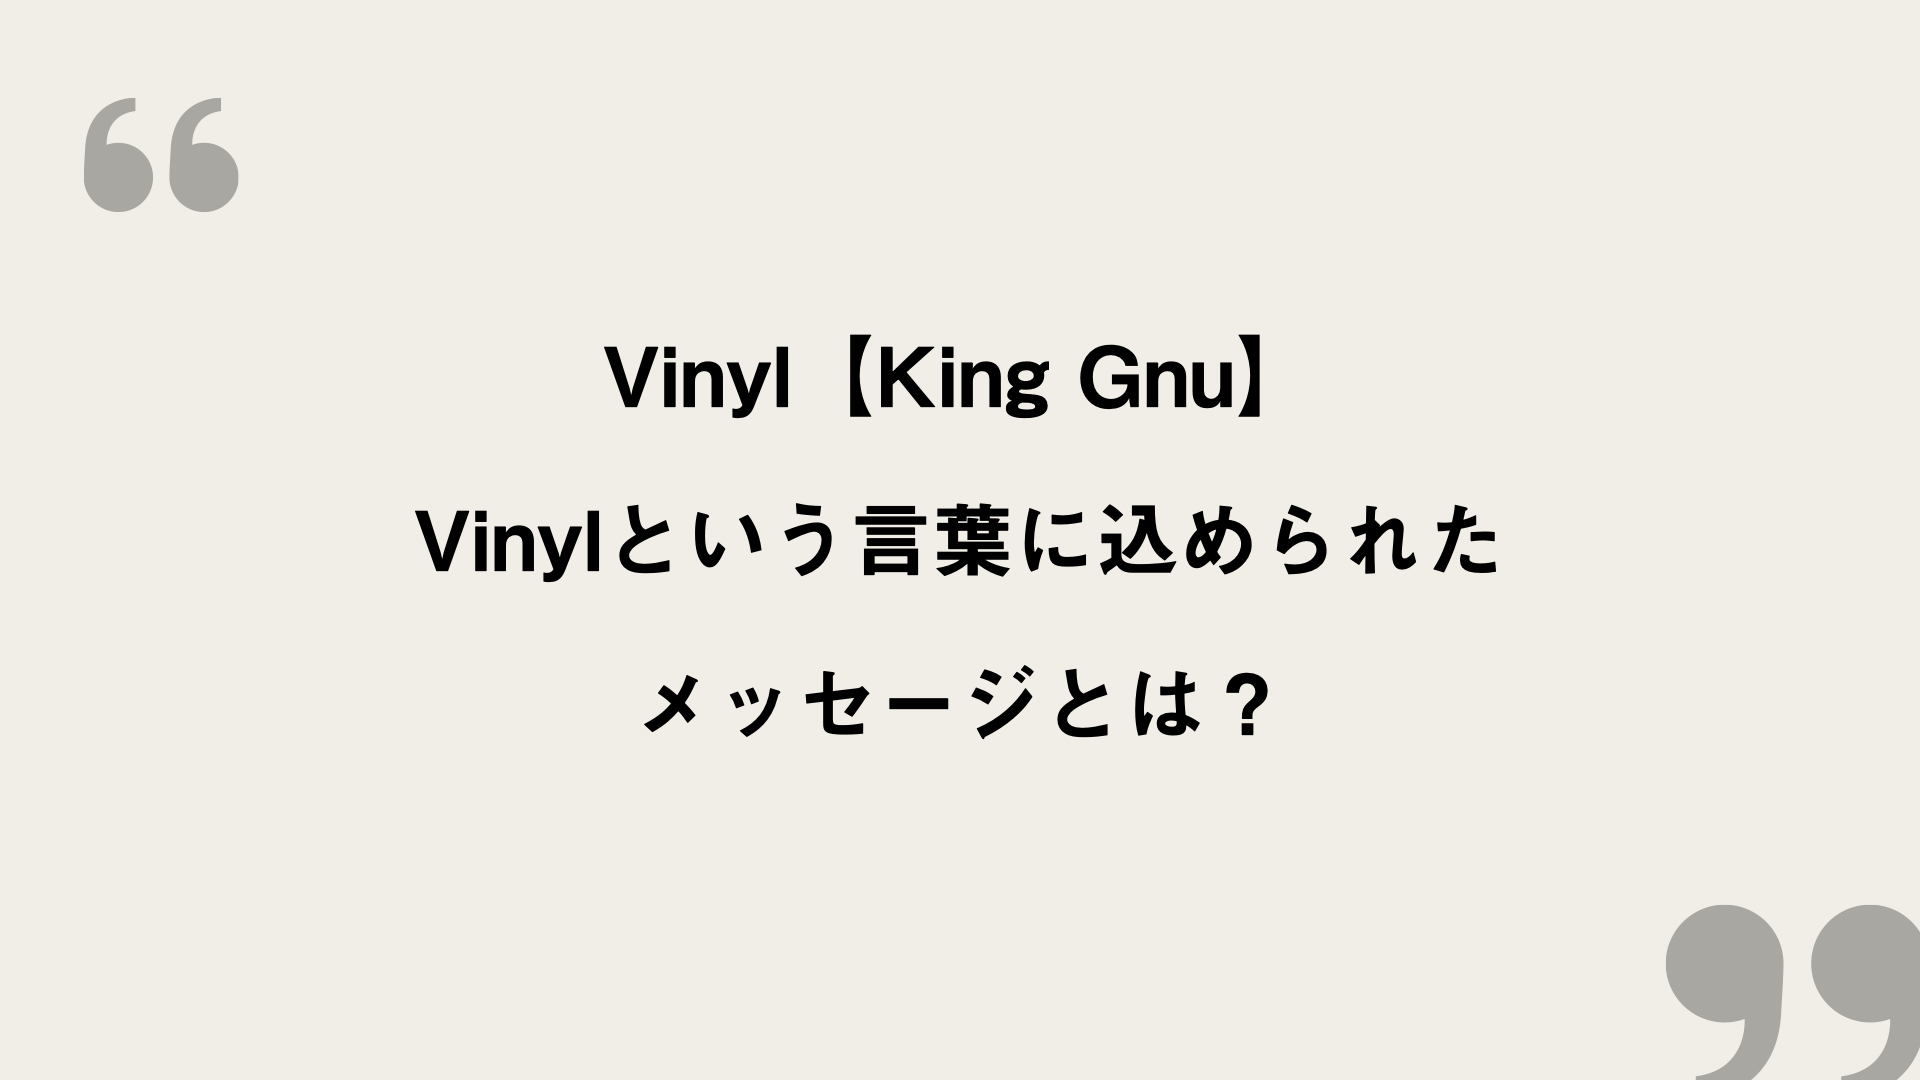 Vinyl King Gnu 歌詞の意味を考察 Vinylという言葉に込められたメッセージとは Framu Media